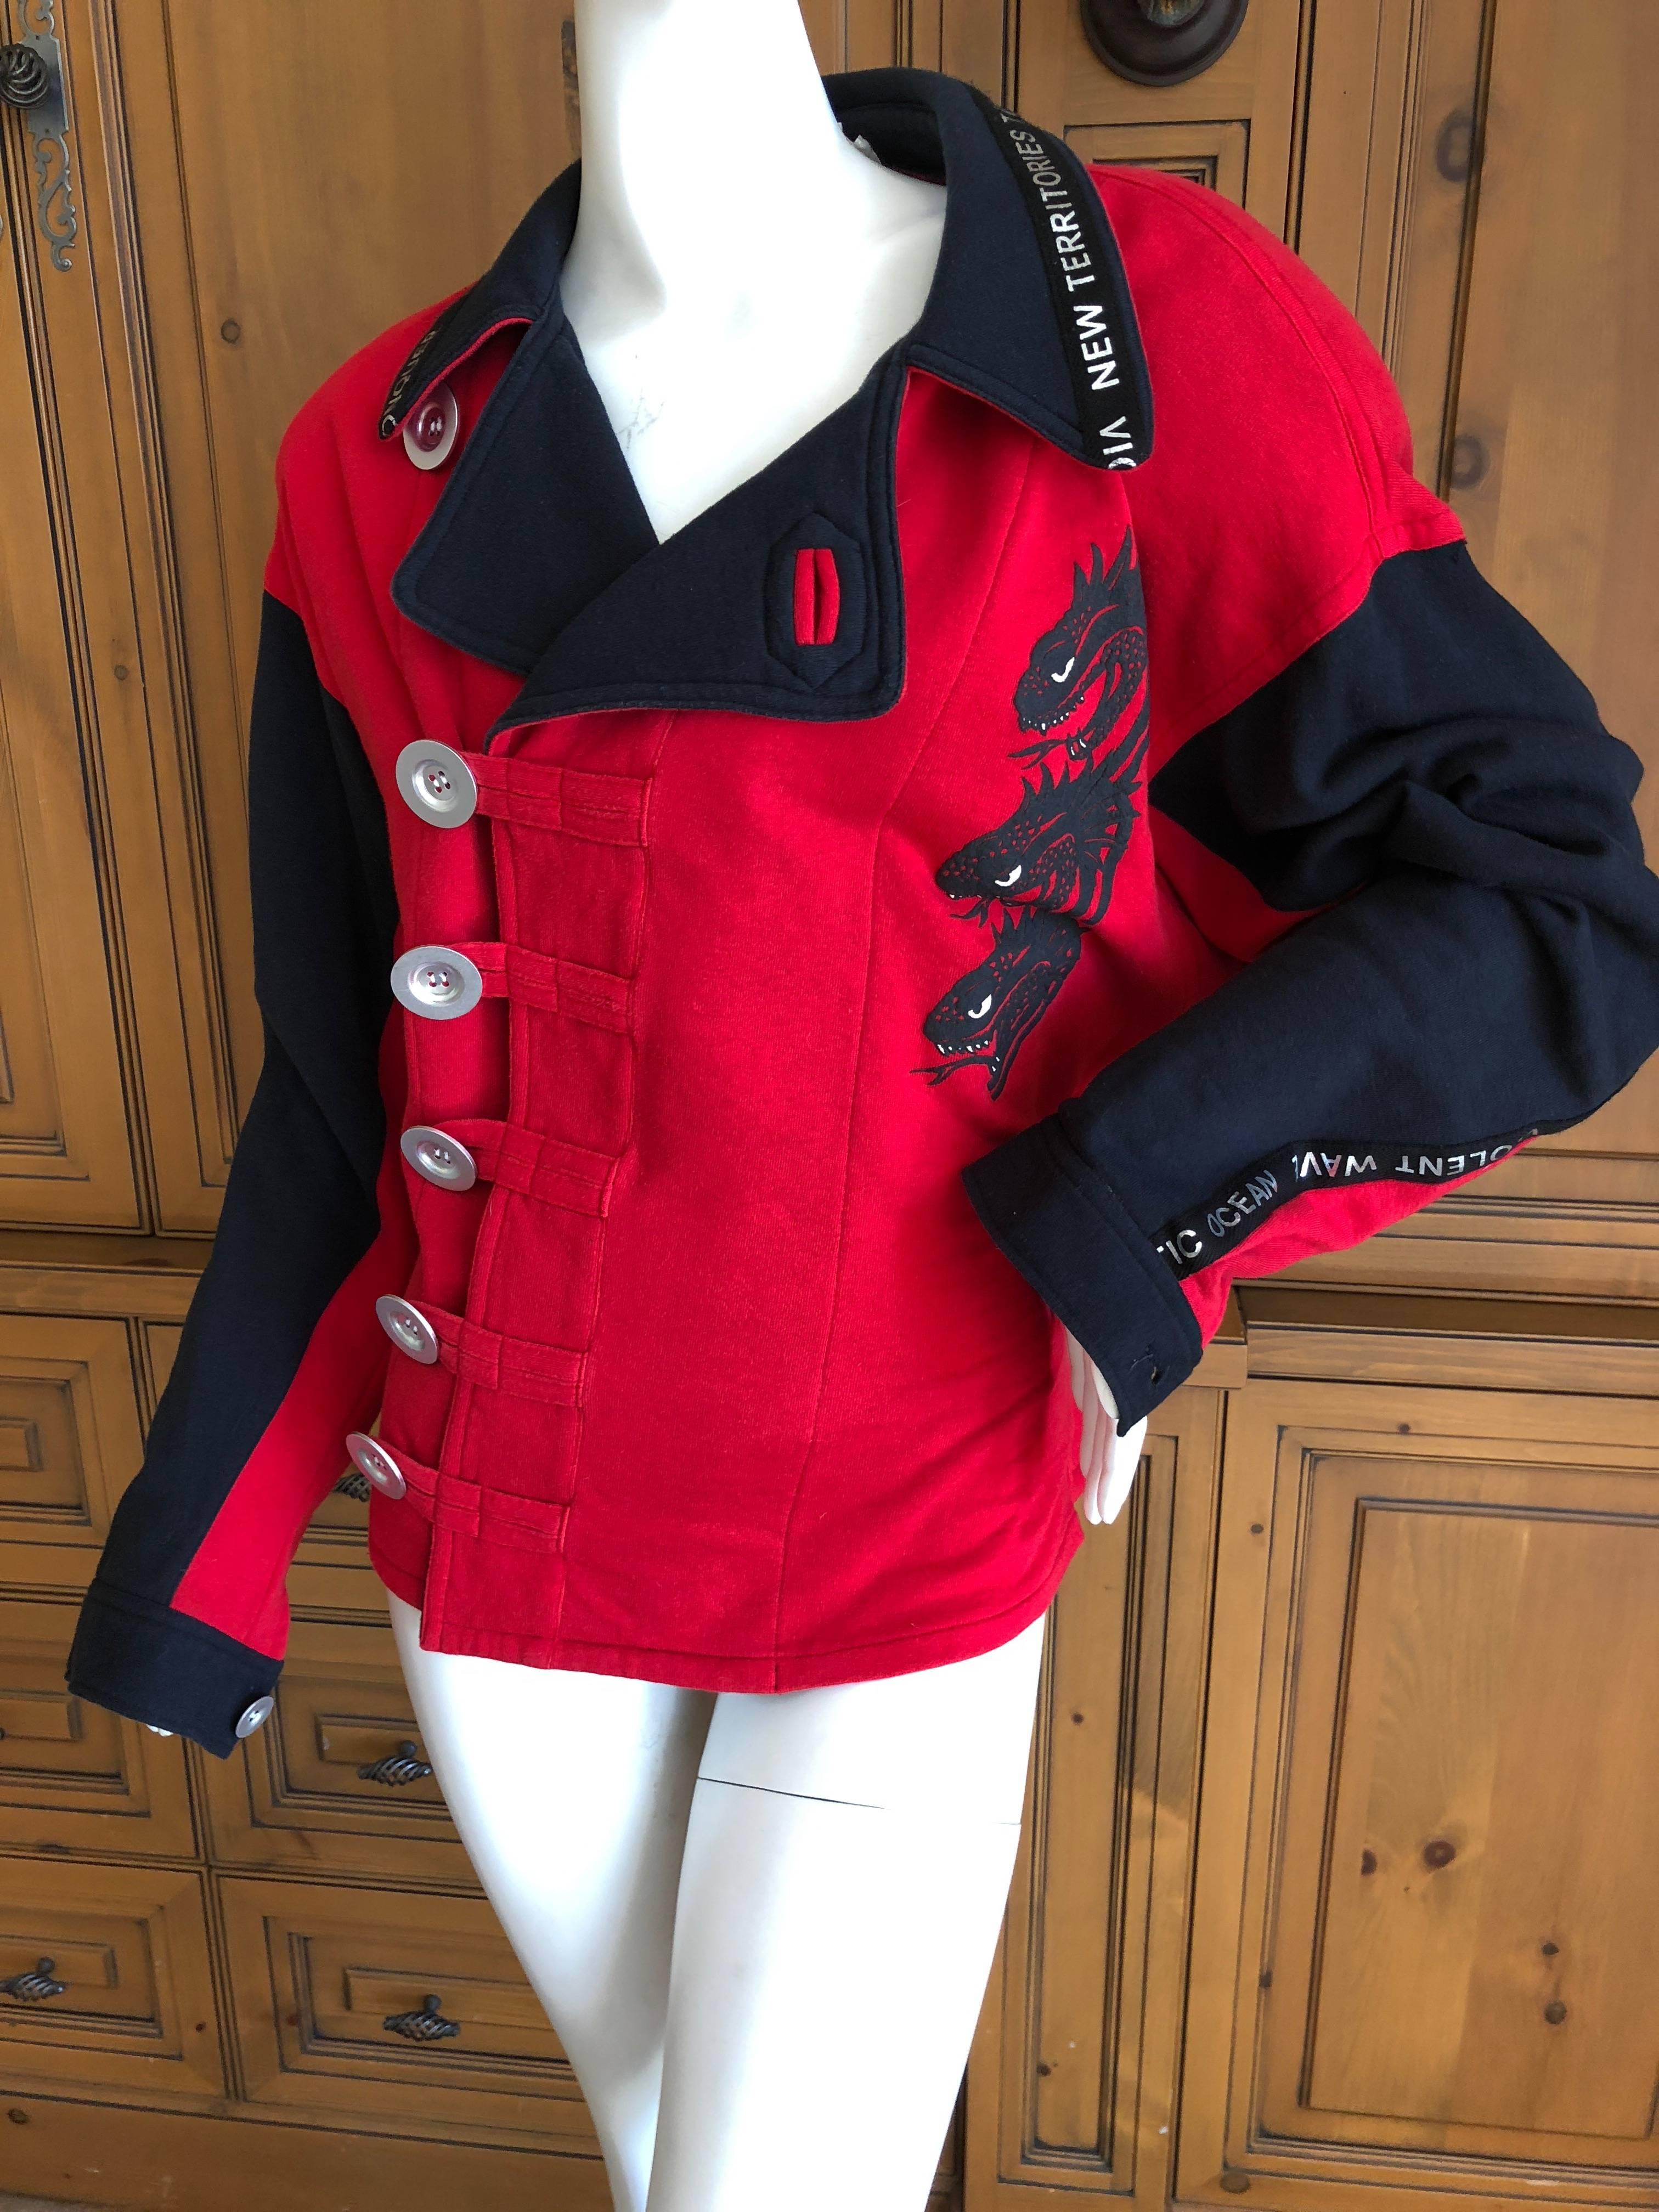 Kansai Yamamoto 1980's Red Dragon Jacket, 
Snap front jacket with wonderful images from Kansai circa 1985.
A predecessor of designers like Issey Miyake, Yohji Yamamoto, Kenzo Takada, and Rei Kawakubo, Kansai Yamamoto was the first Japanese designer